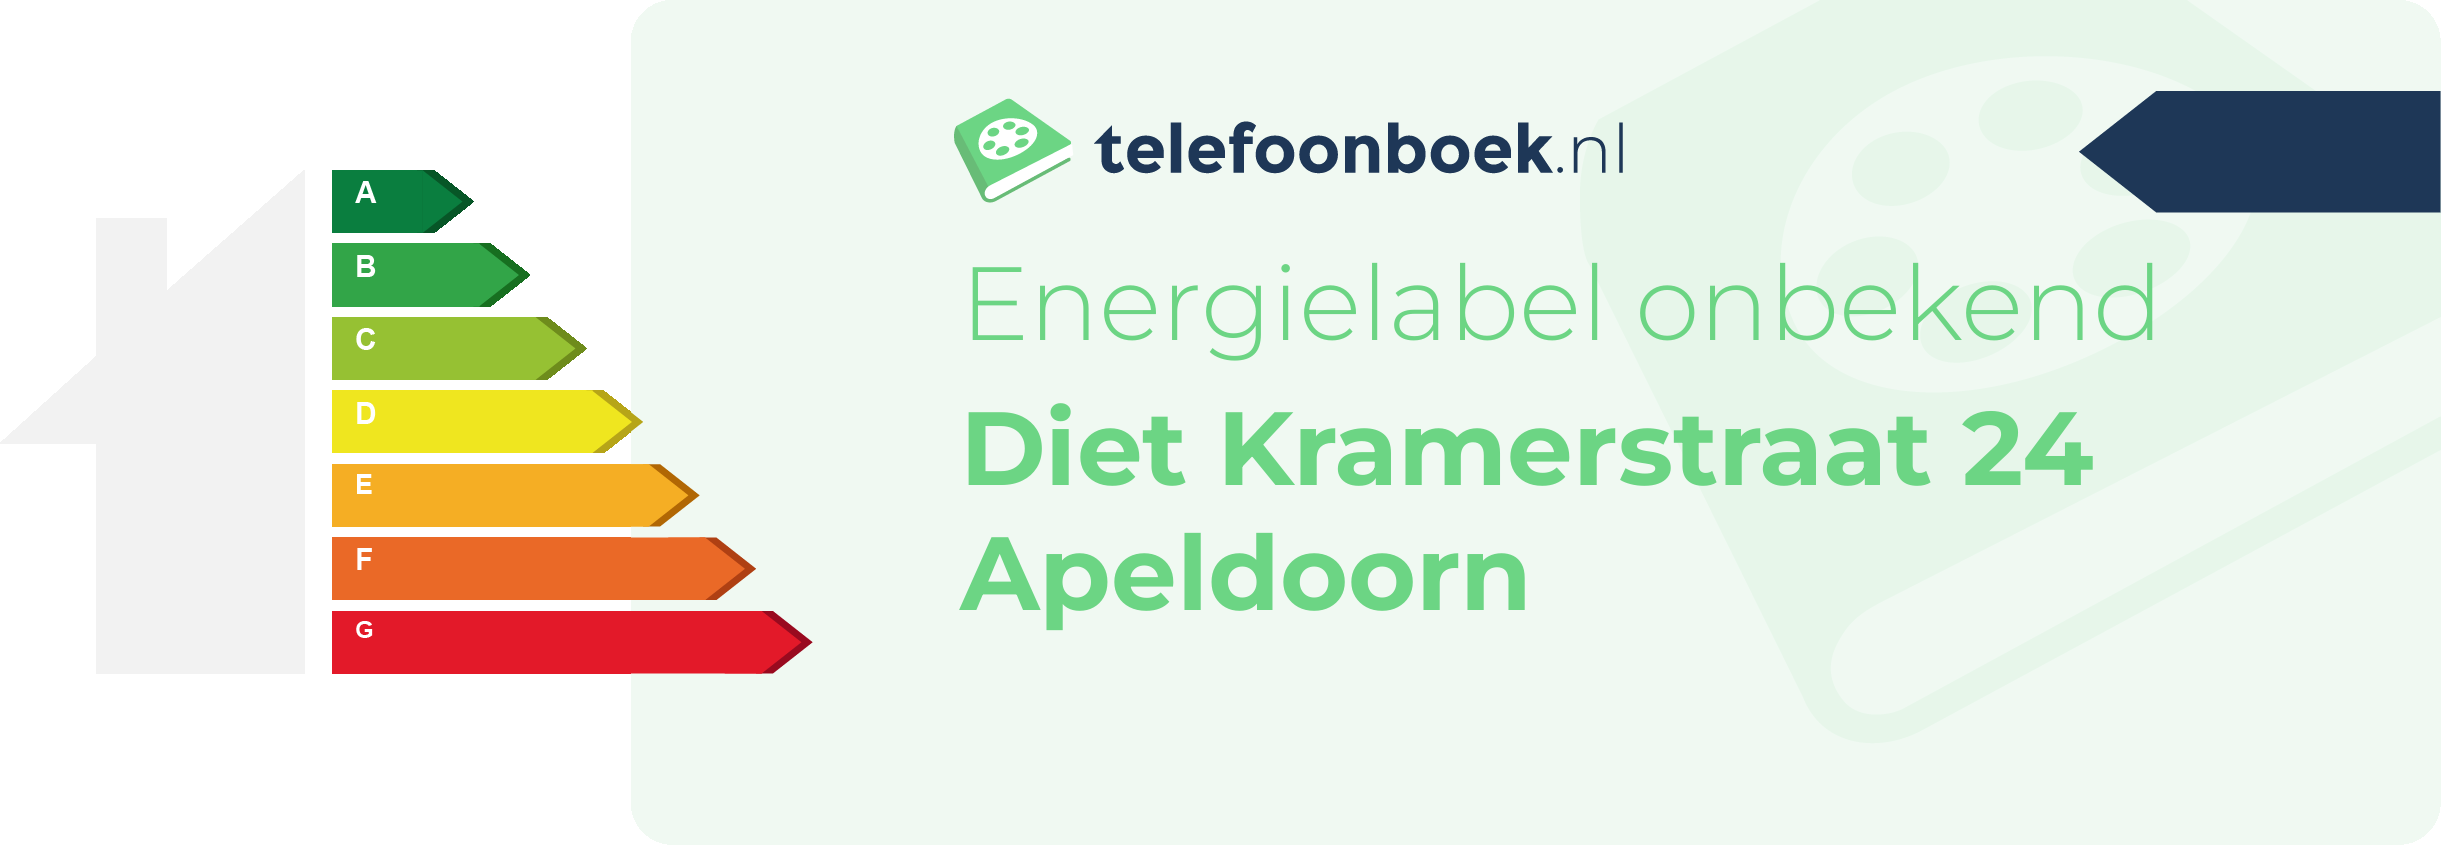 Energielabel Diet Kramerstraat 24 Apeldoorn